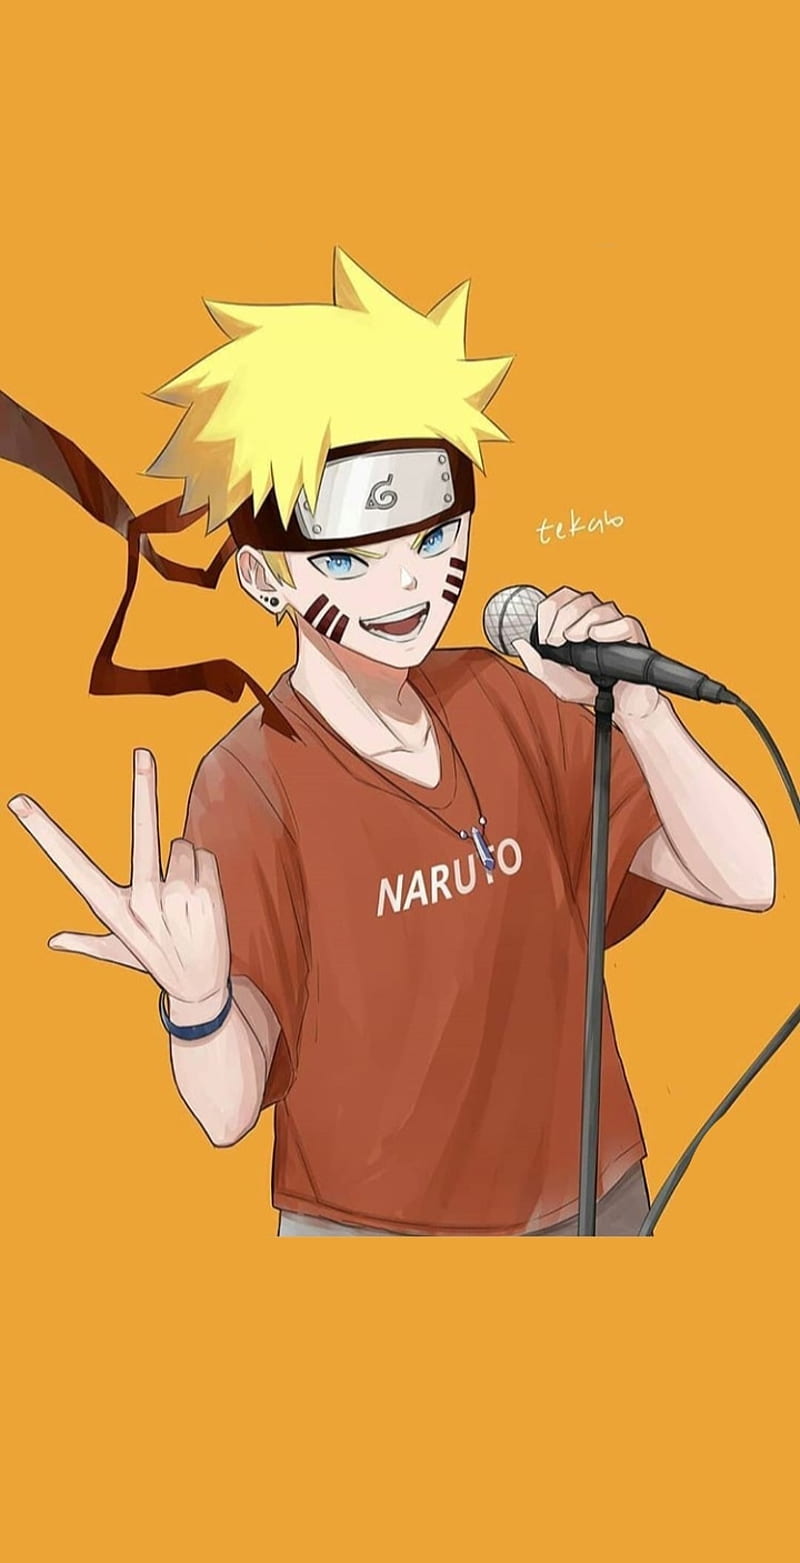 How to Draw Naruto - YouTube